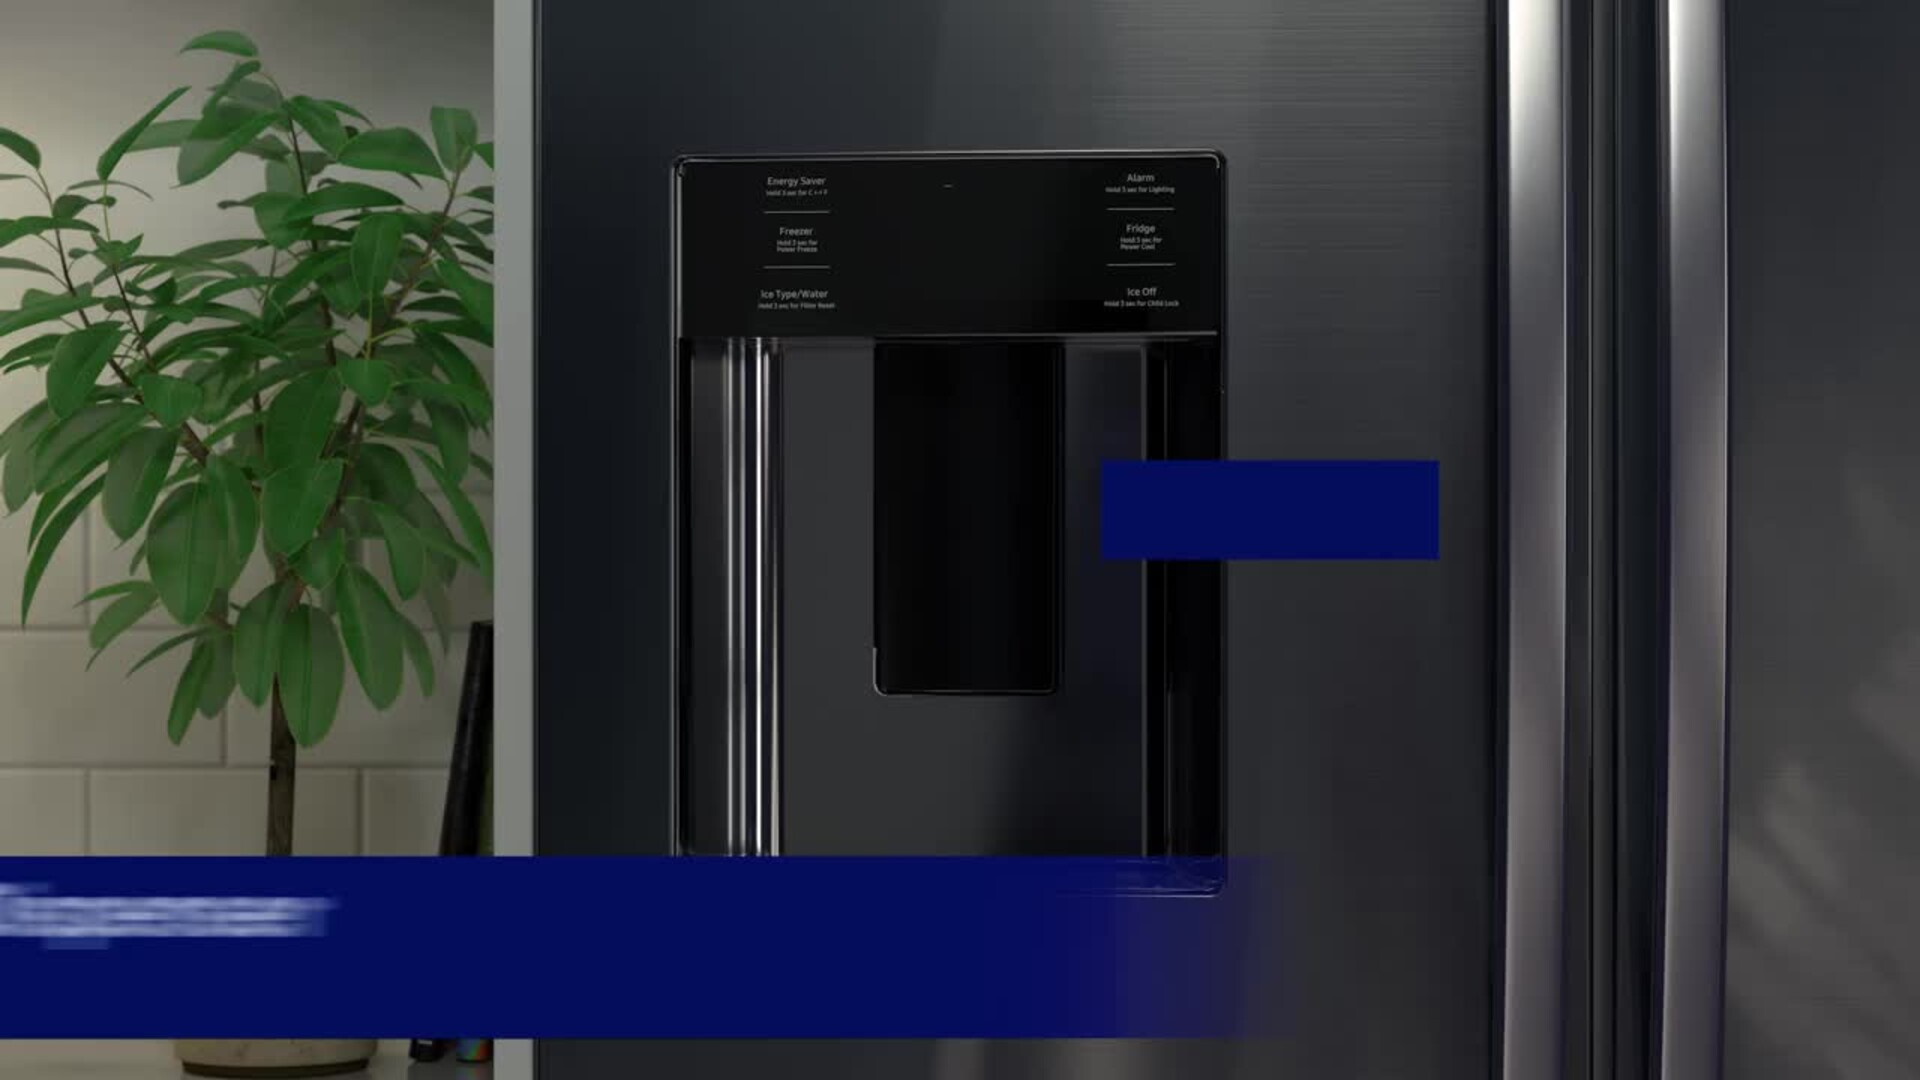 Samsung Refrigerator In-Depth Review (Model RF261BEAESR) - Prudent Reviews